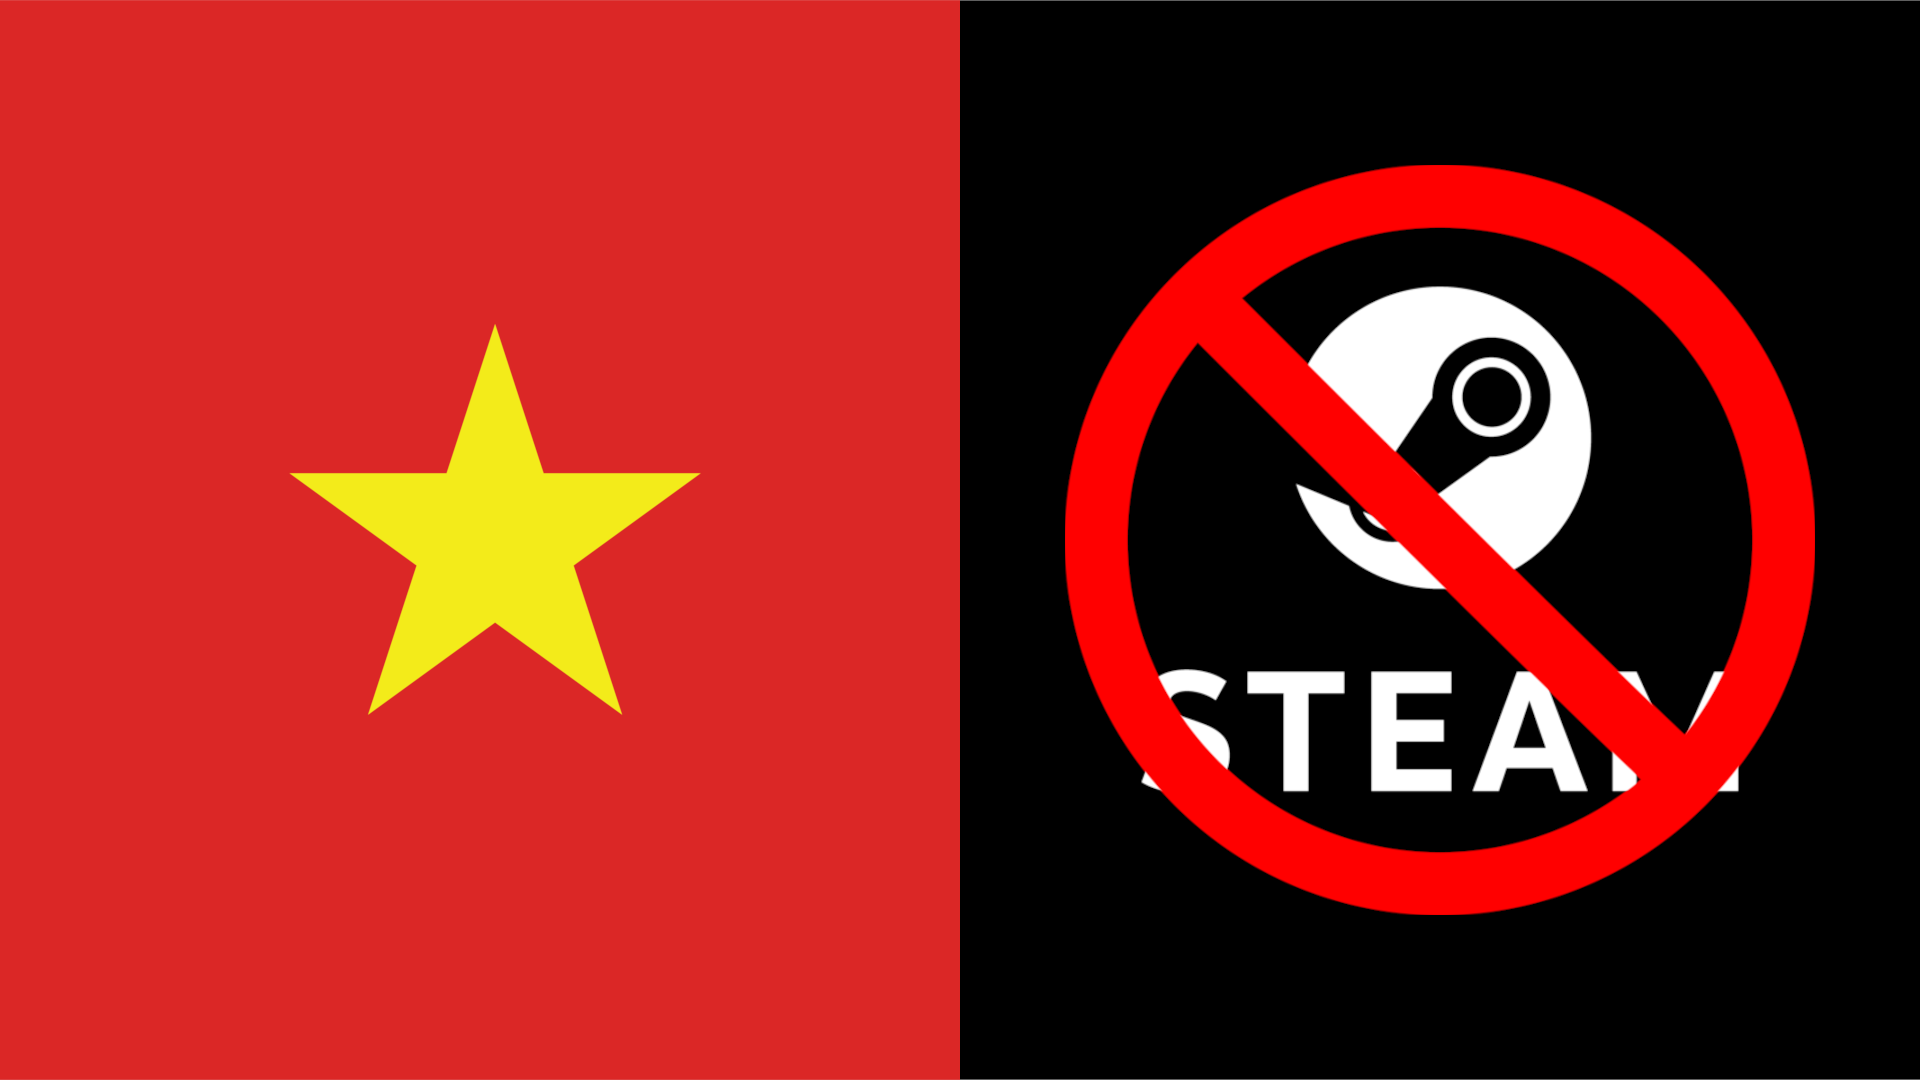 Steam запретили во Вьетнаме, сообщили пользователи соцсетей